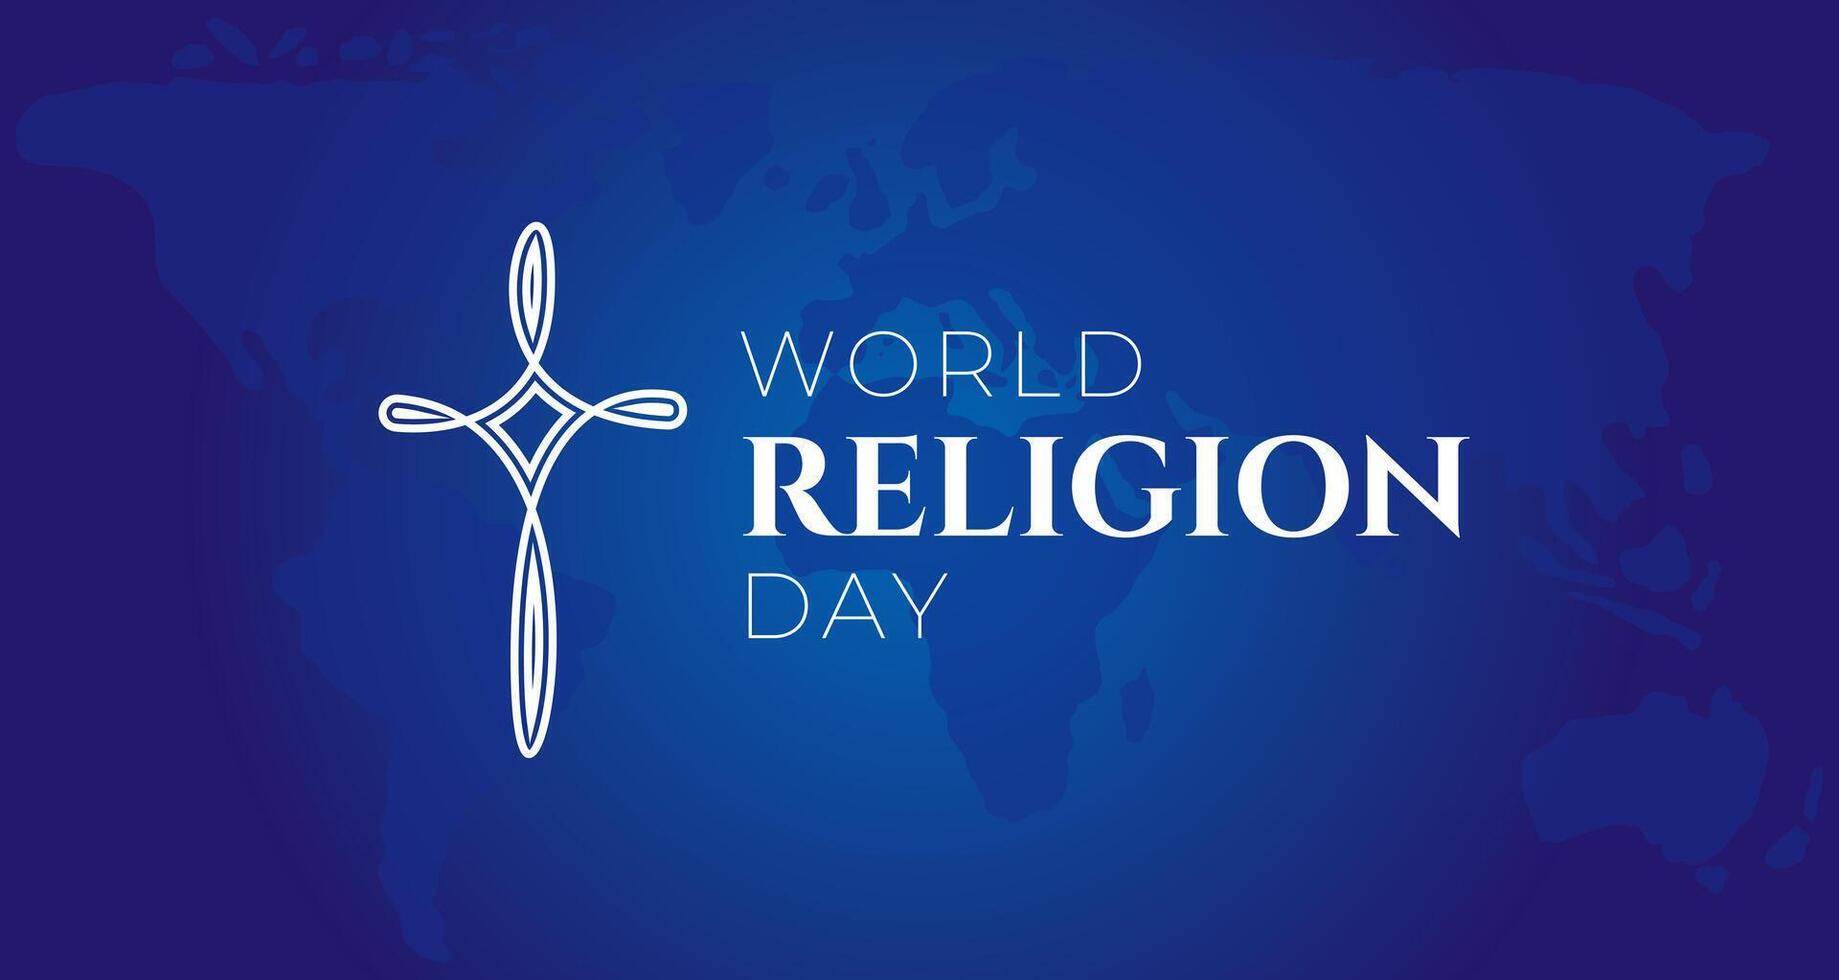 Welt Religion Tag Blau Hintergrund Illustration Design mit abstrakt Christian Kreuz vektor